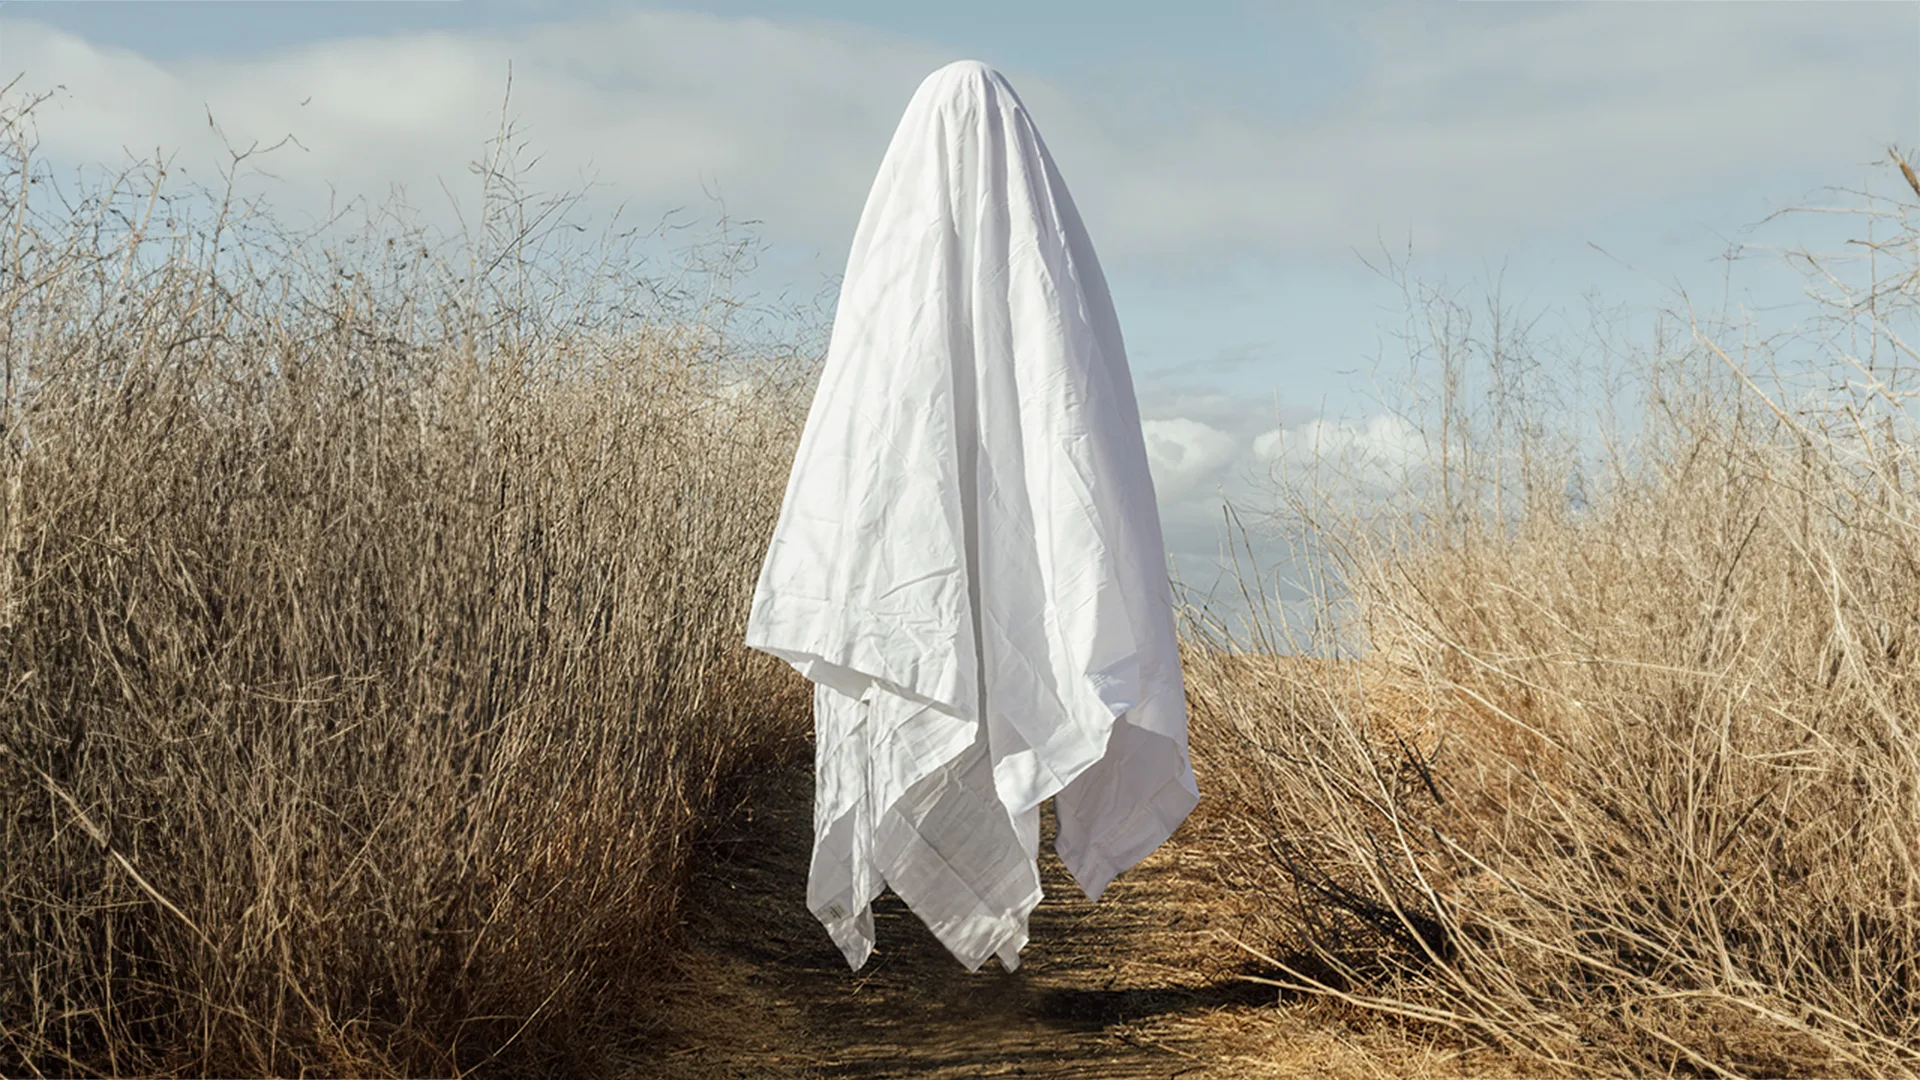 A white sheet representing a ghost walking through a field